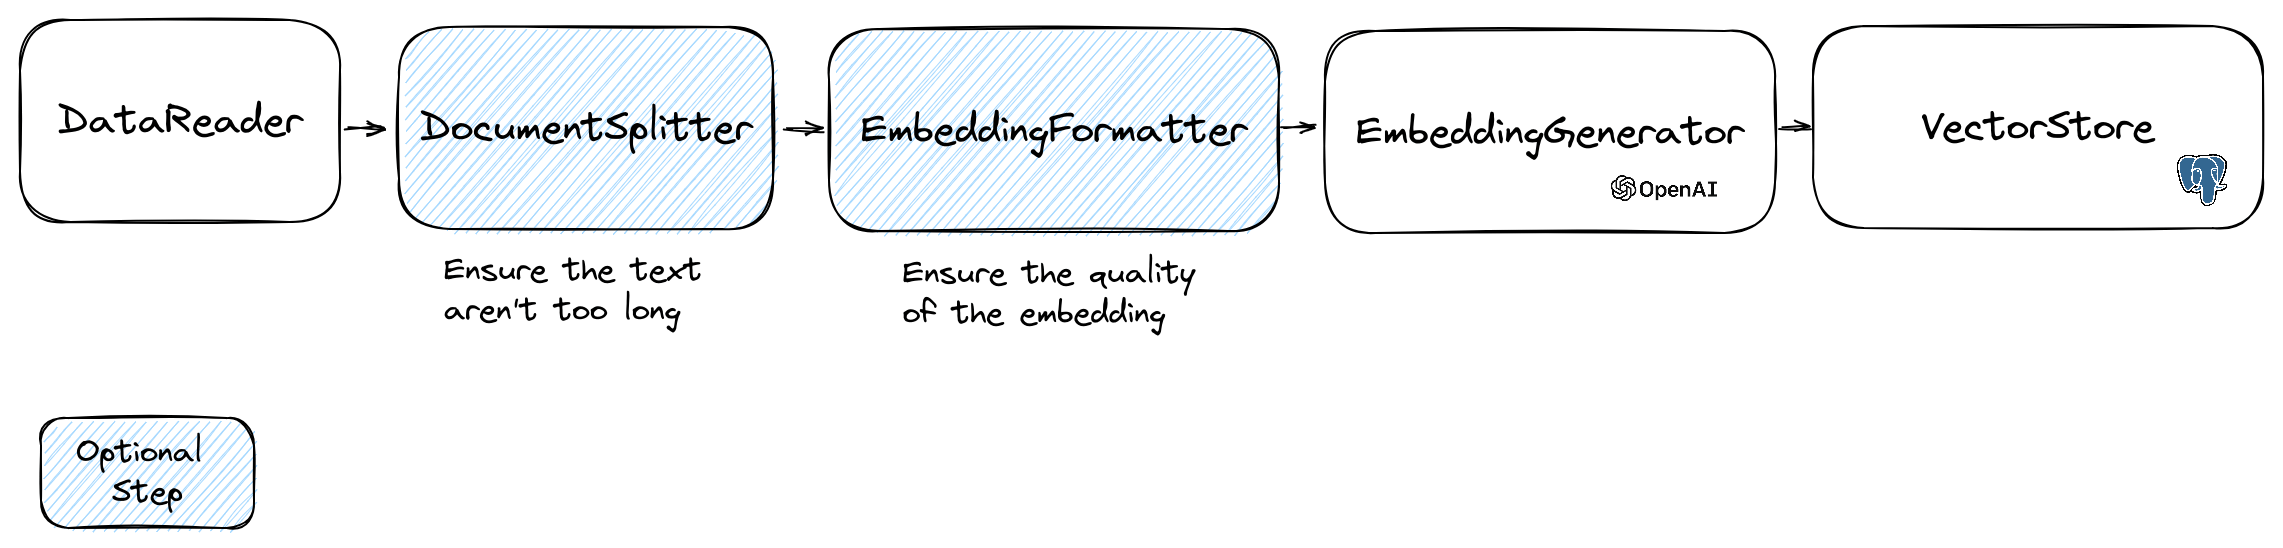 Embeddings flow